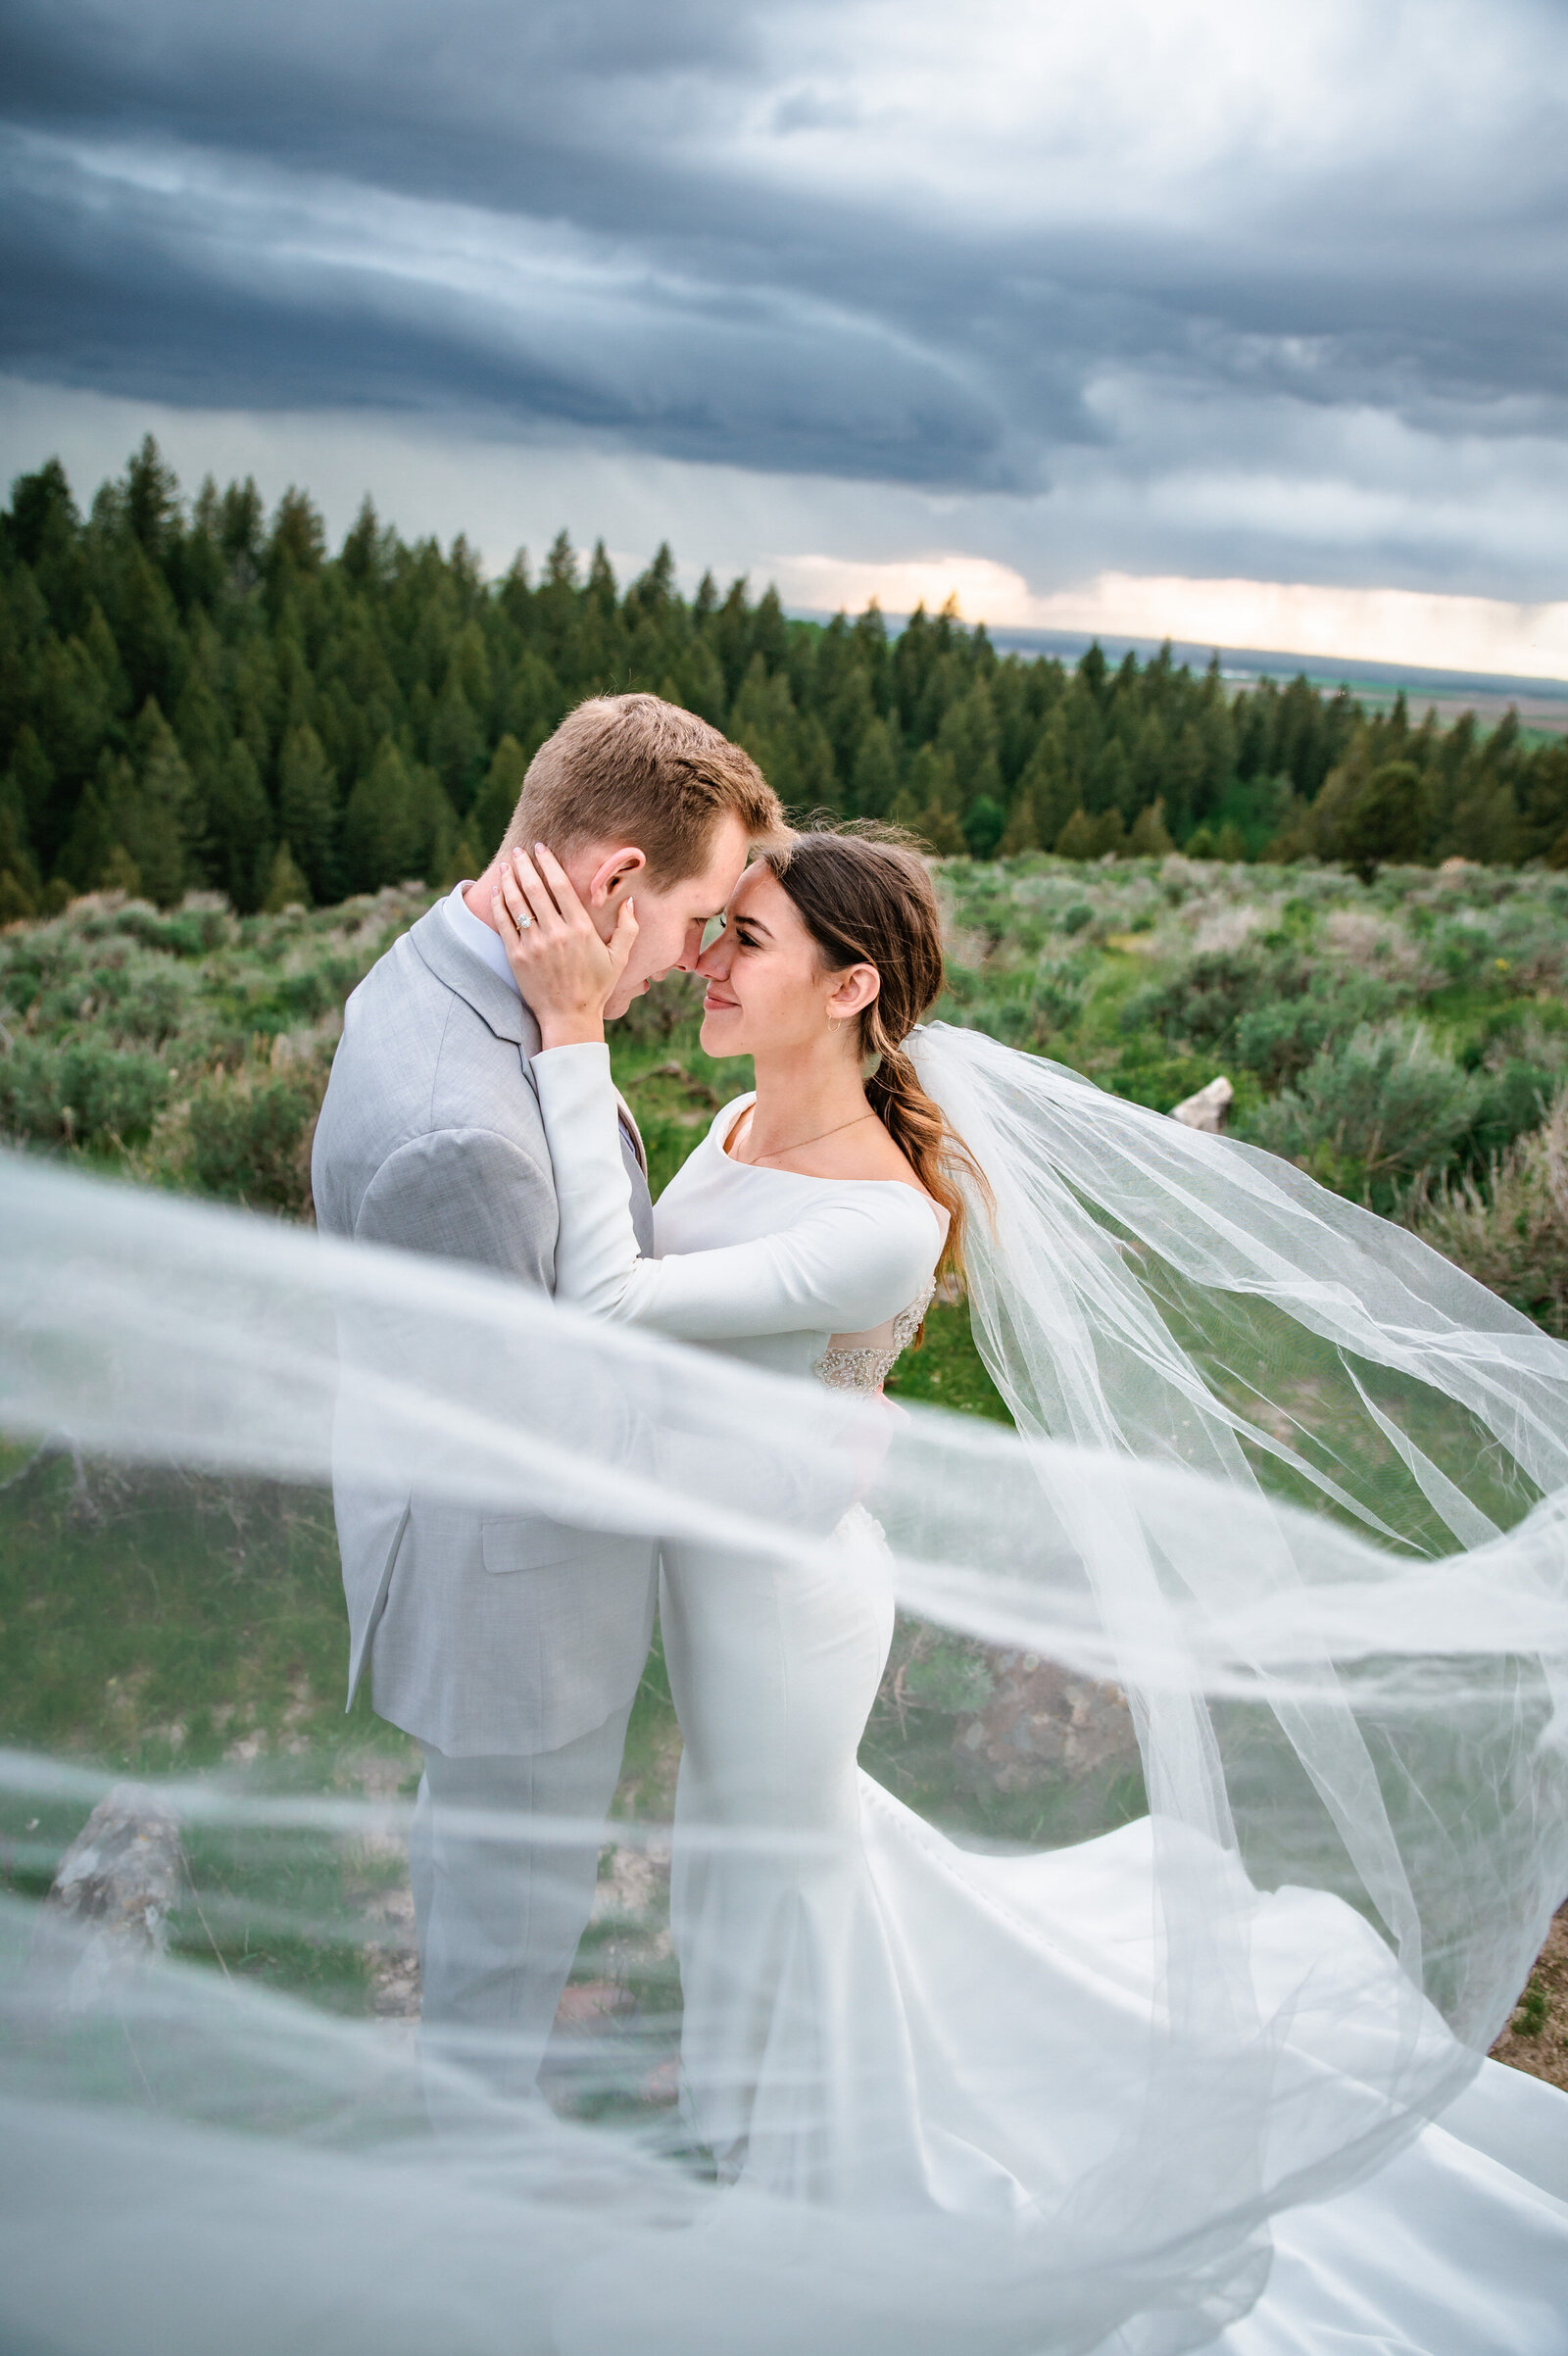 Jackson hole photographers capture bride touching groom's face after Grand Teton wedding